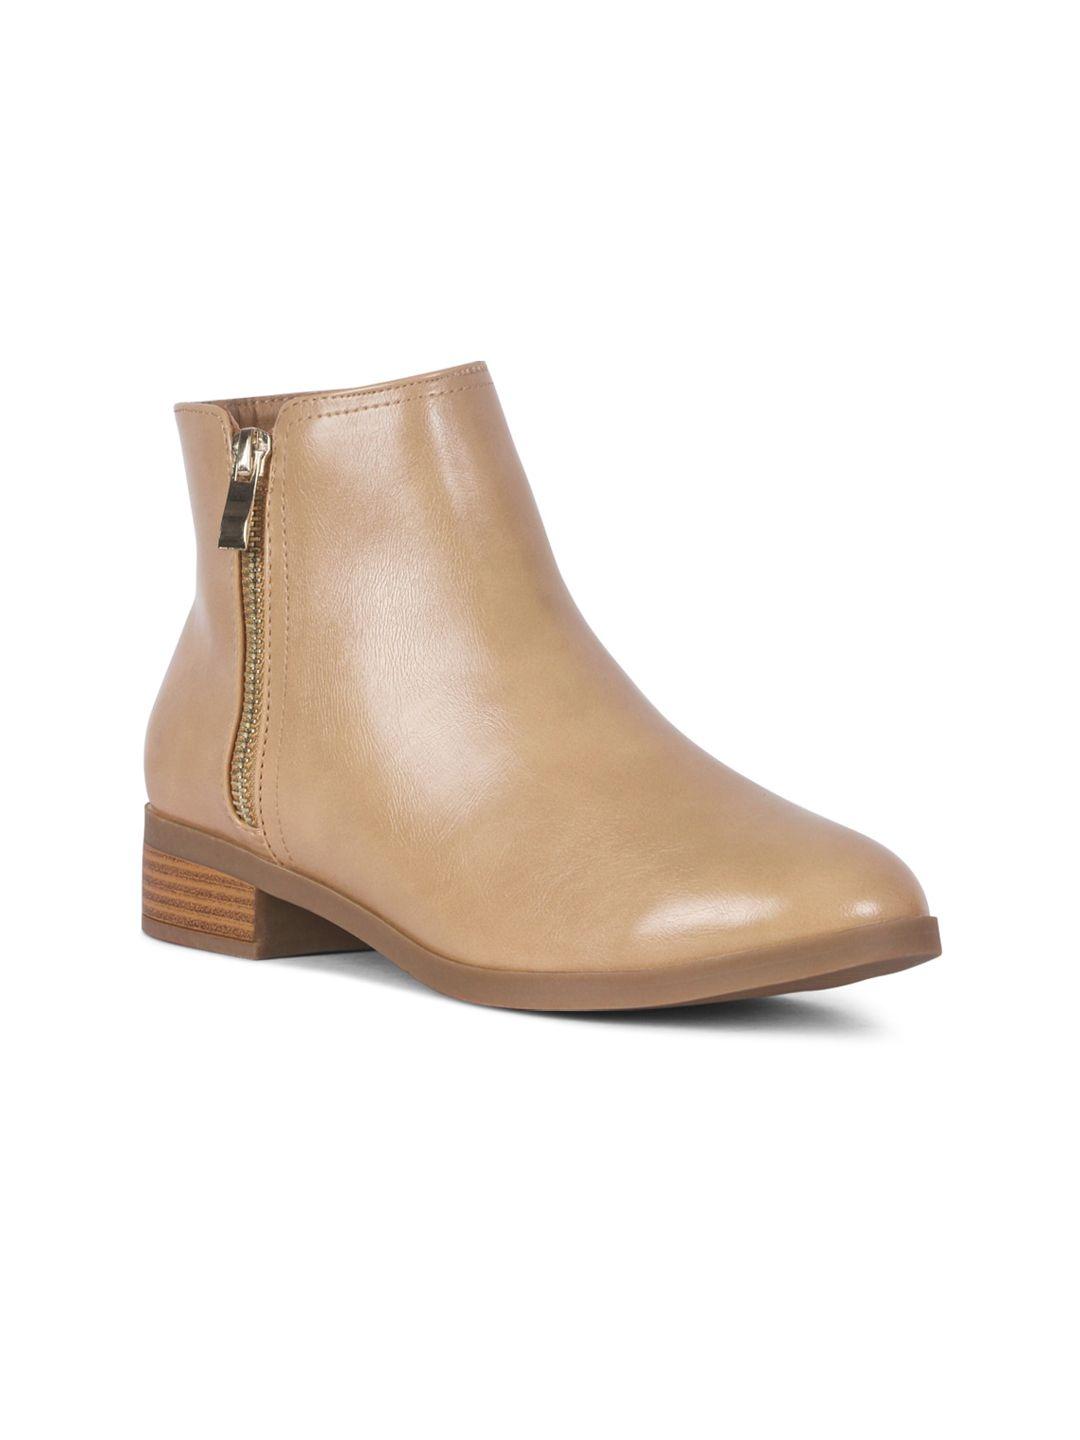 london rag tan brown block heeled boots